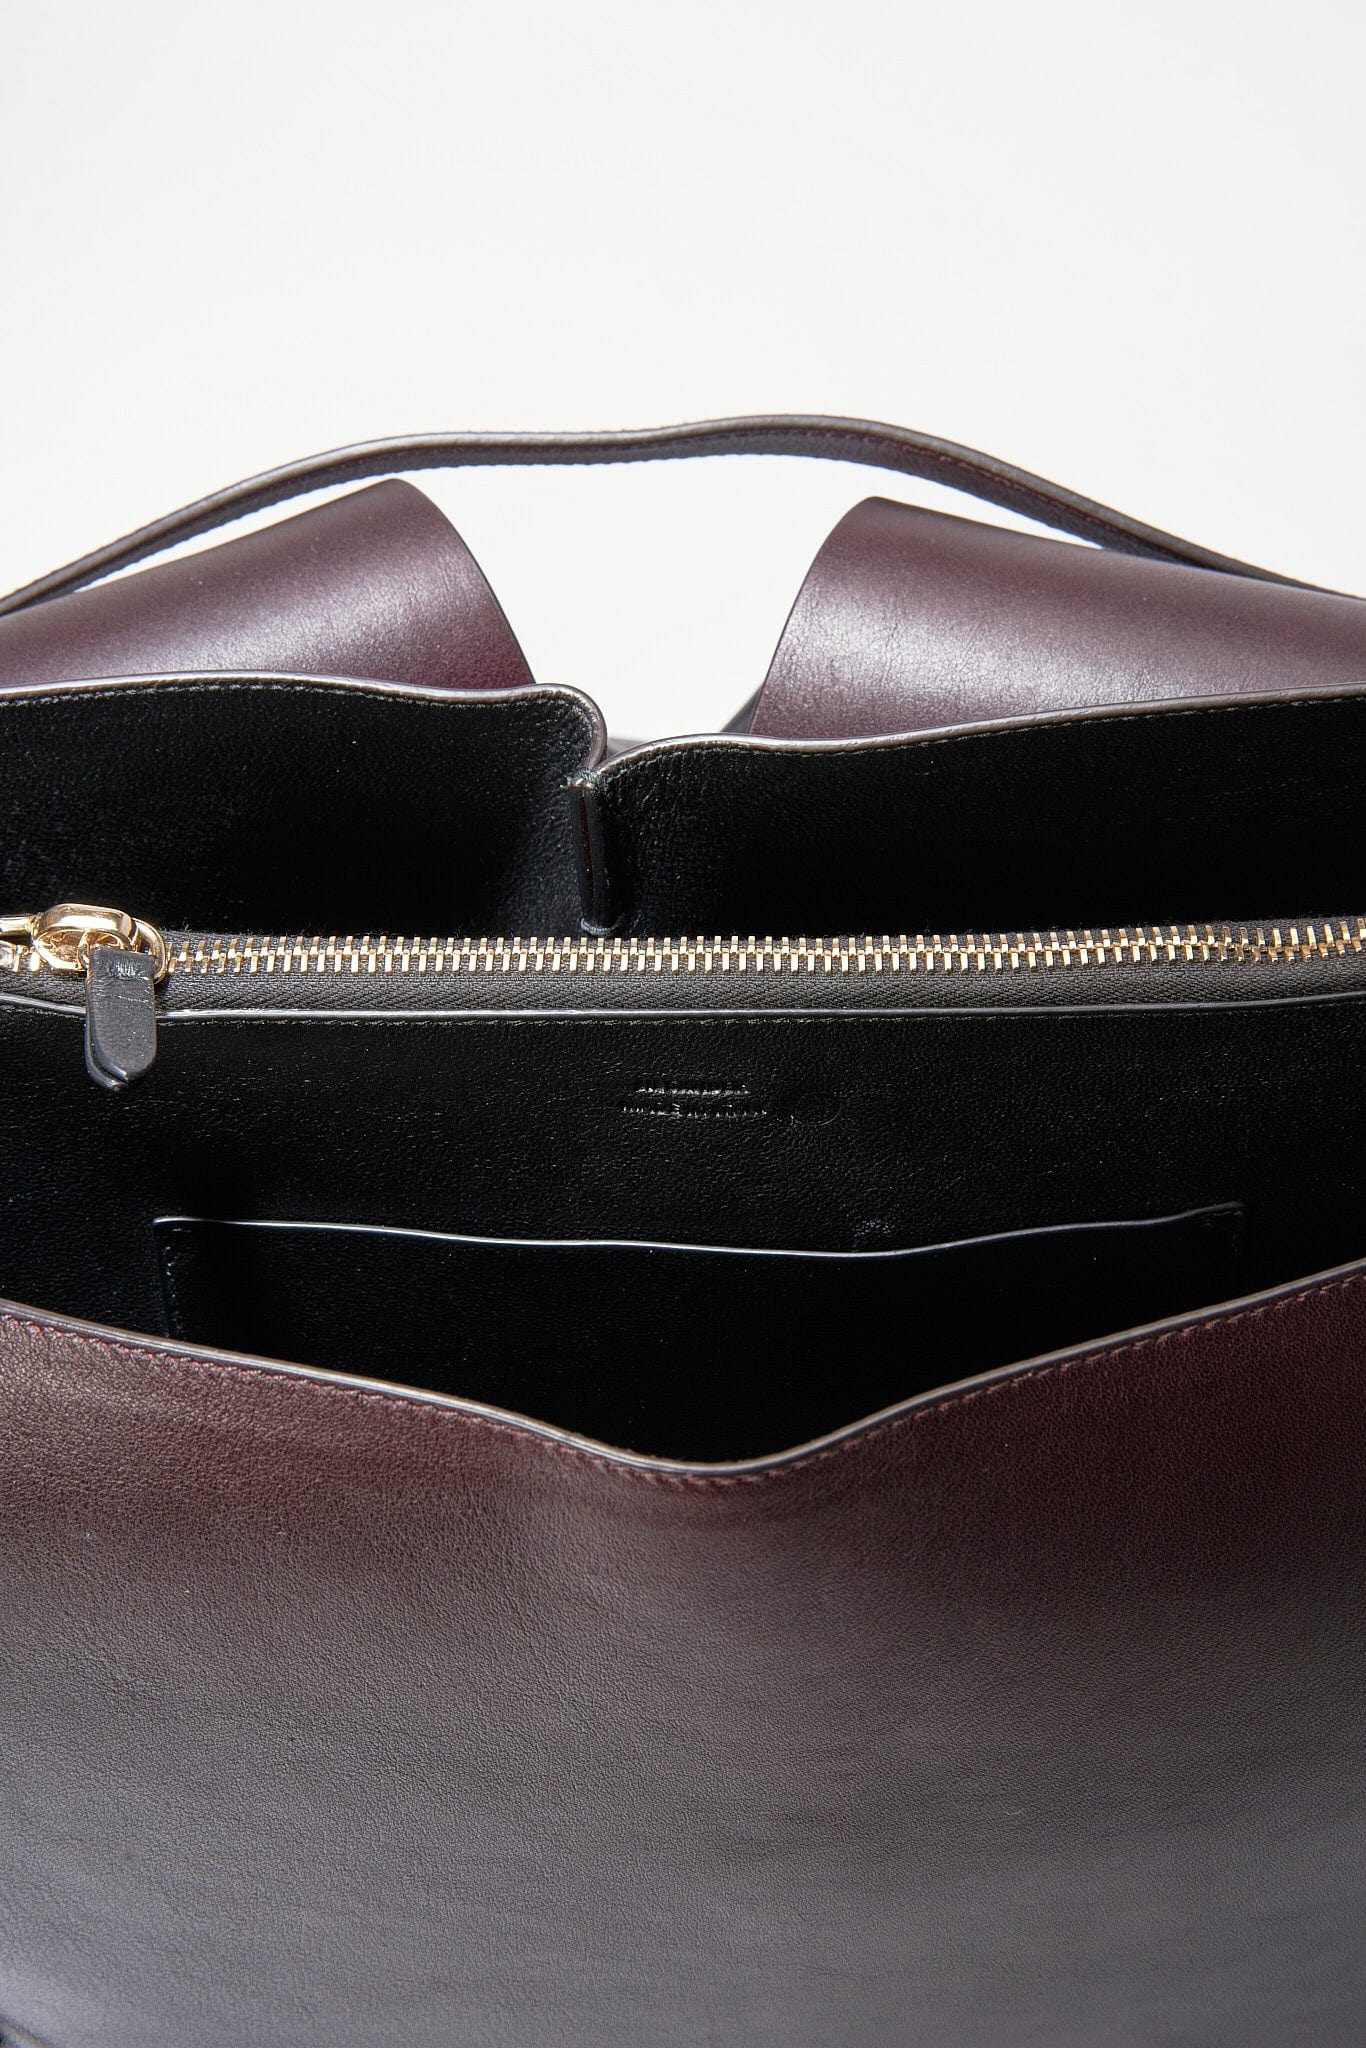 Aesther Ekme - Leather Tote Bag - Burgundy